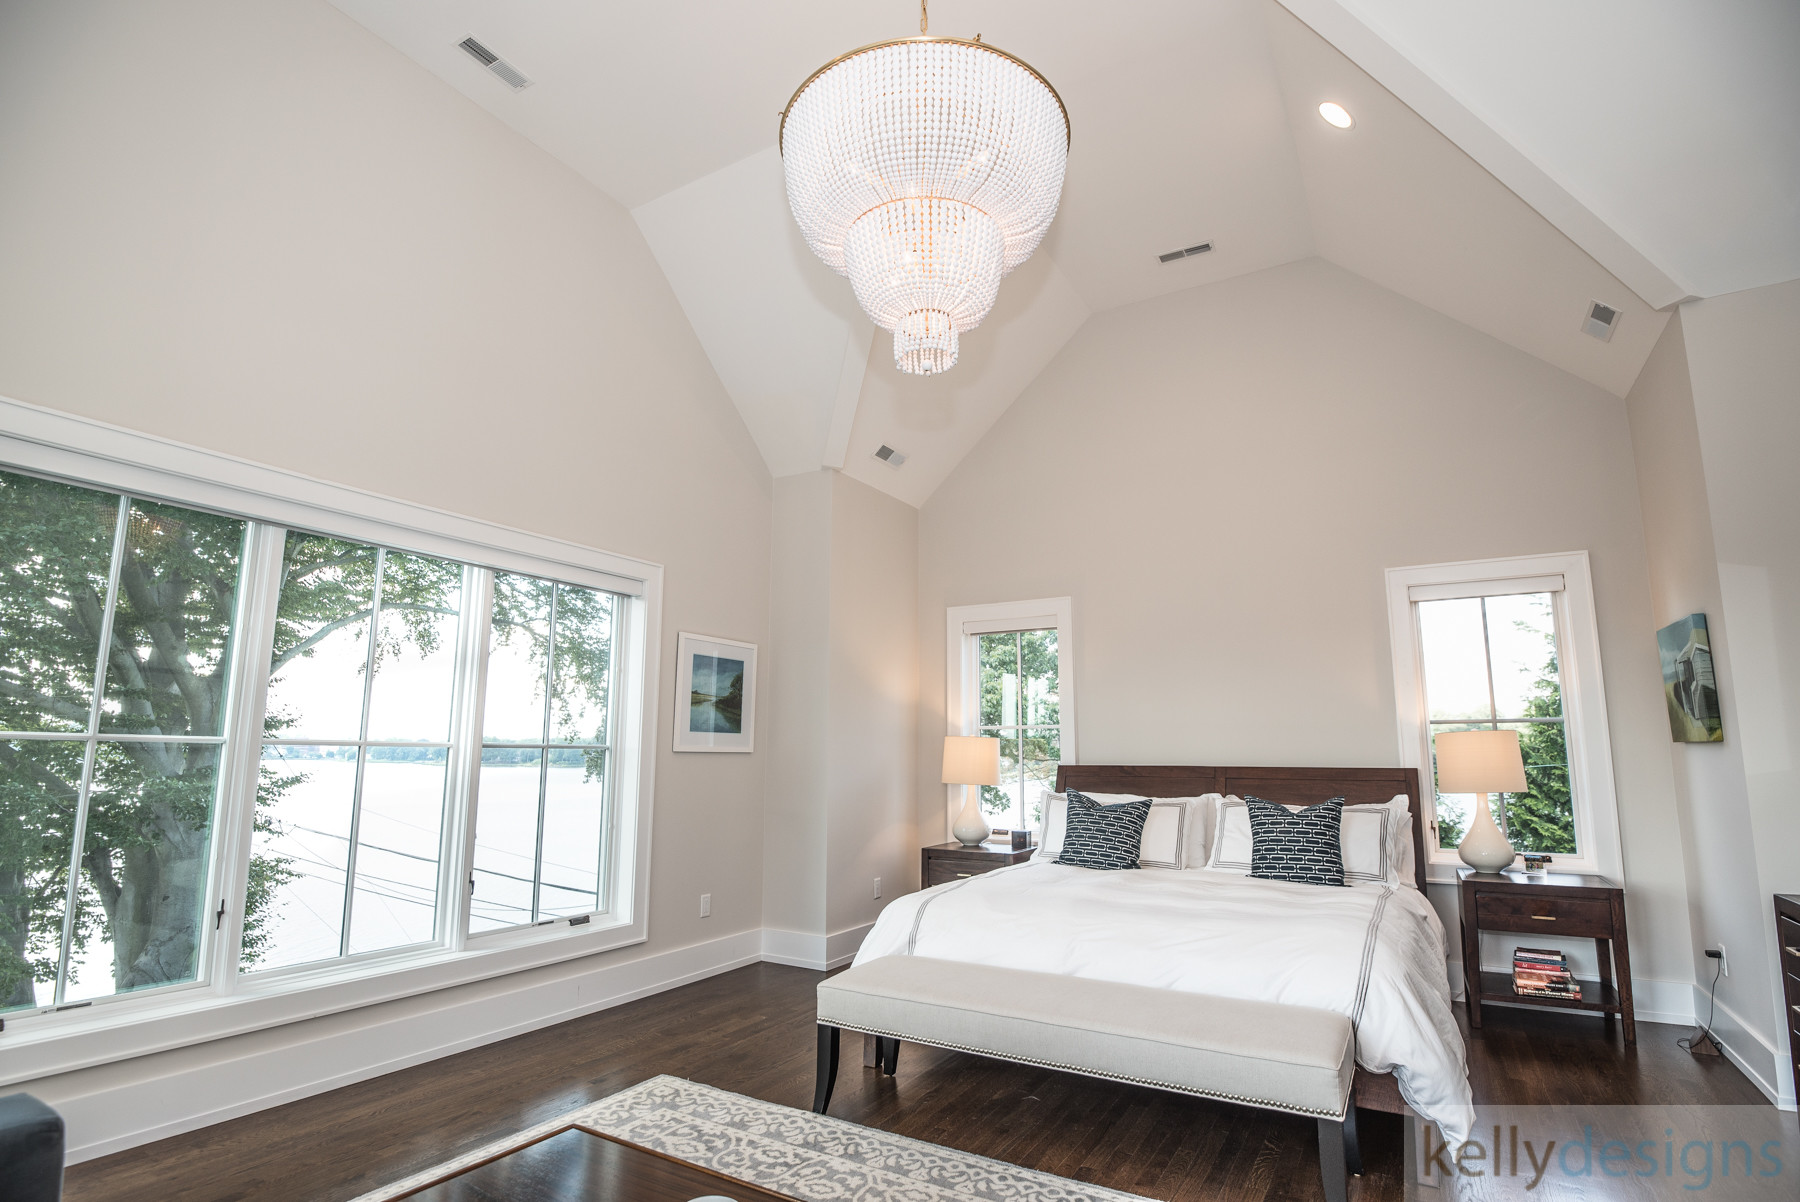 Brush Island Master Bedroom   Interior Design By Kellydesigns